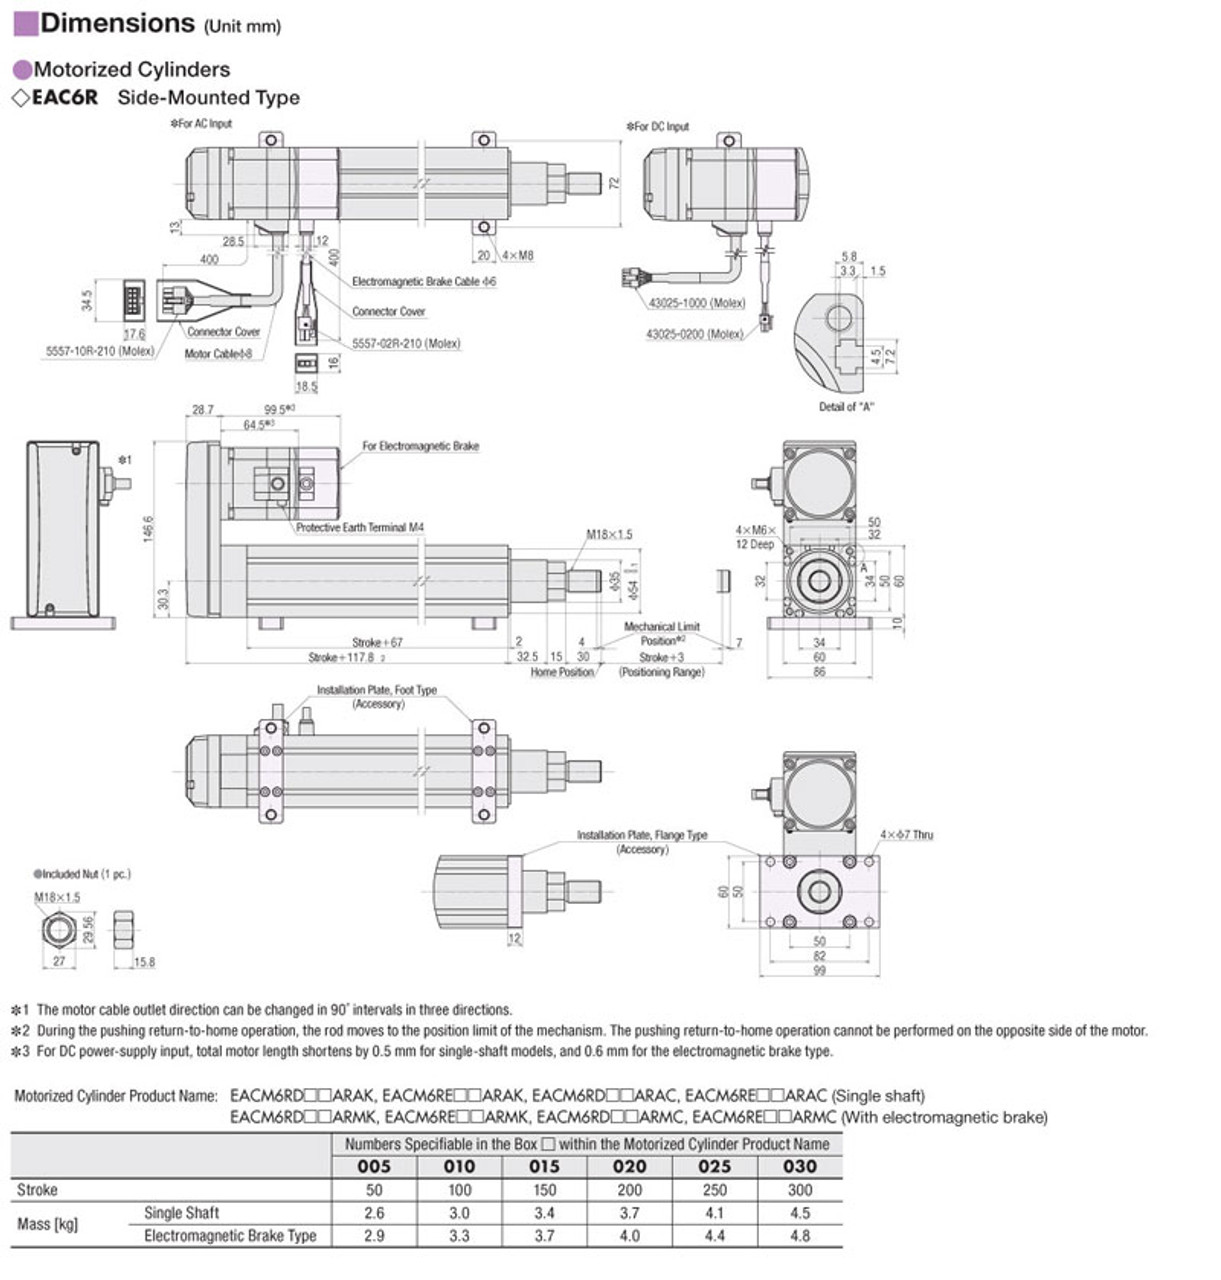 EAC6R-D25-ARMS - Dimensions